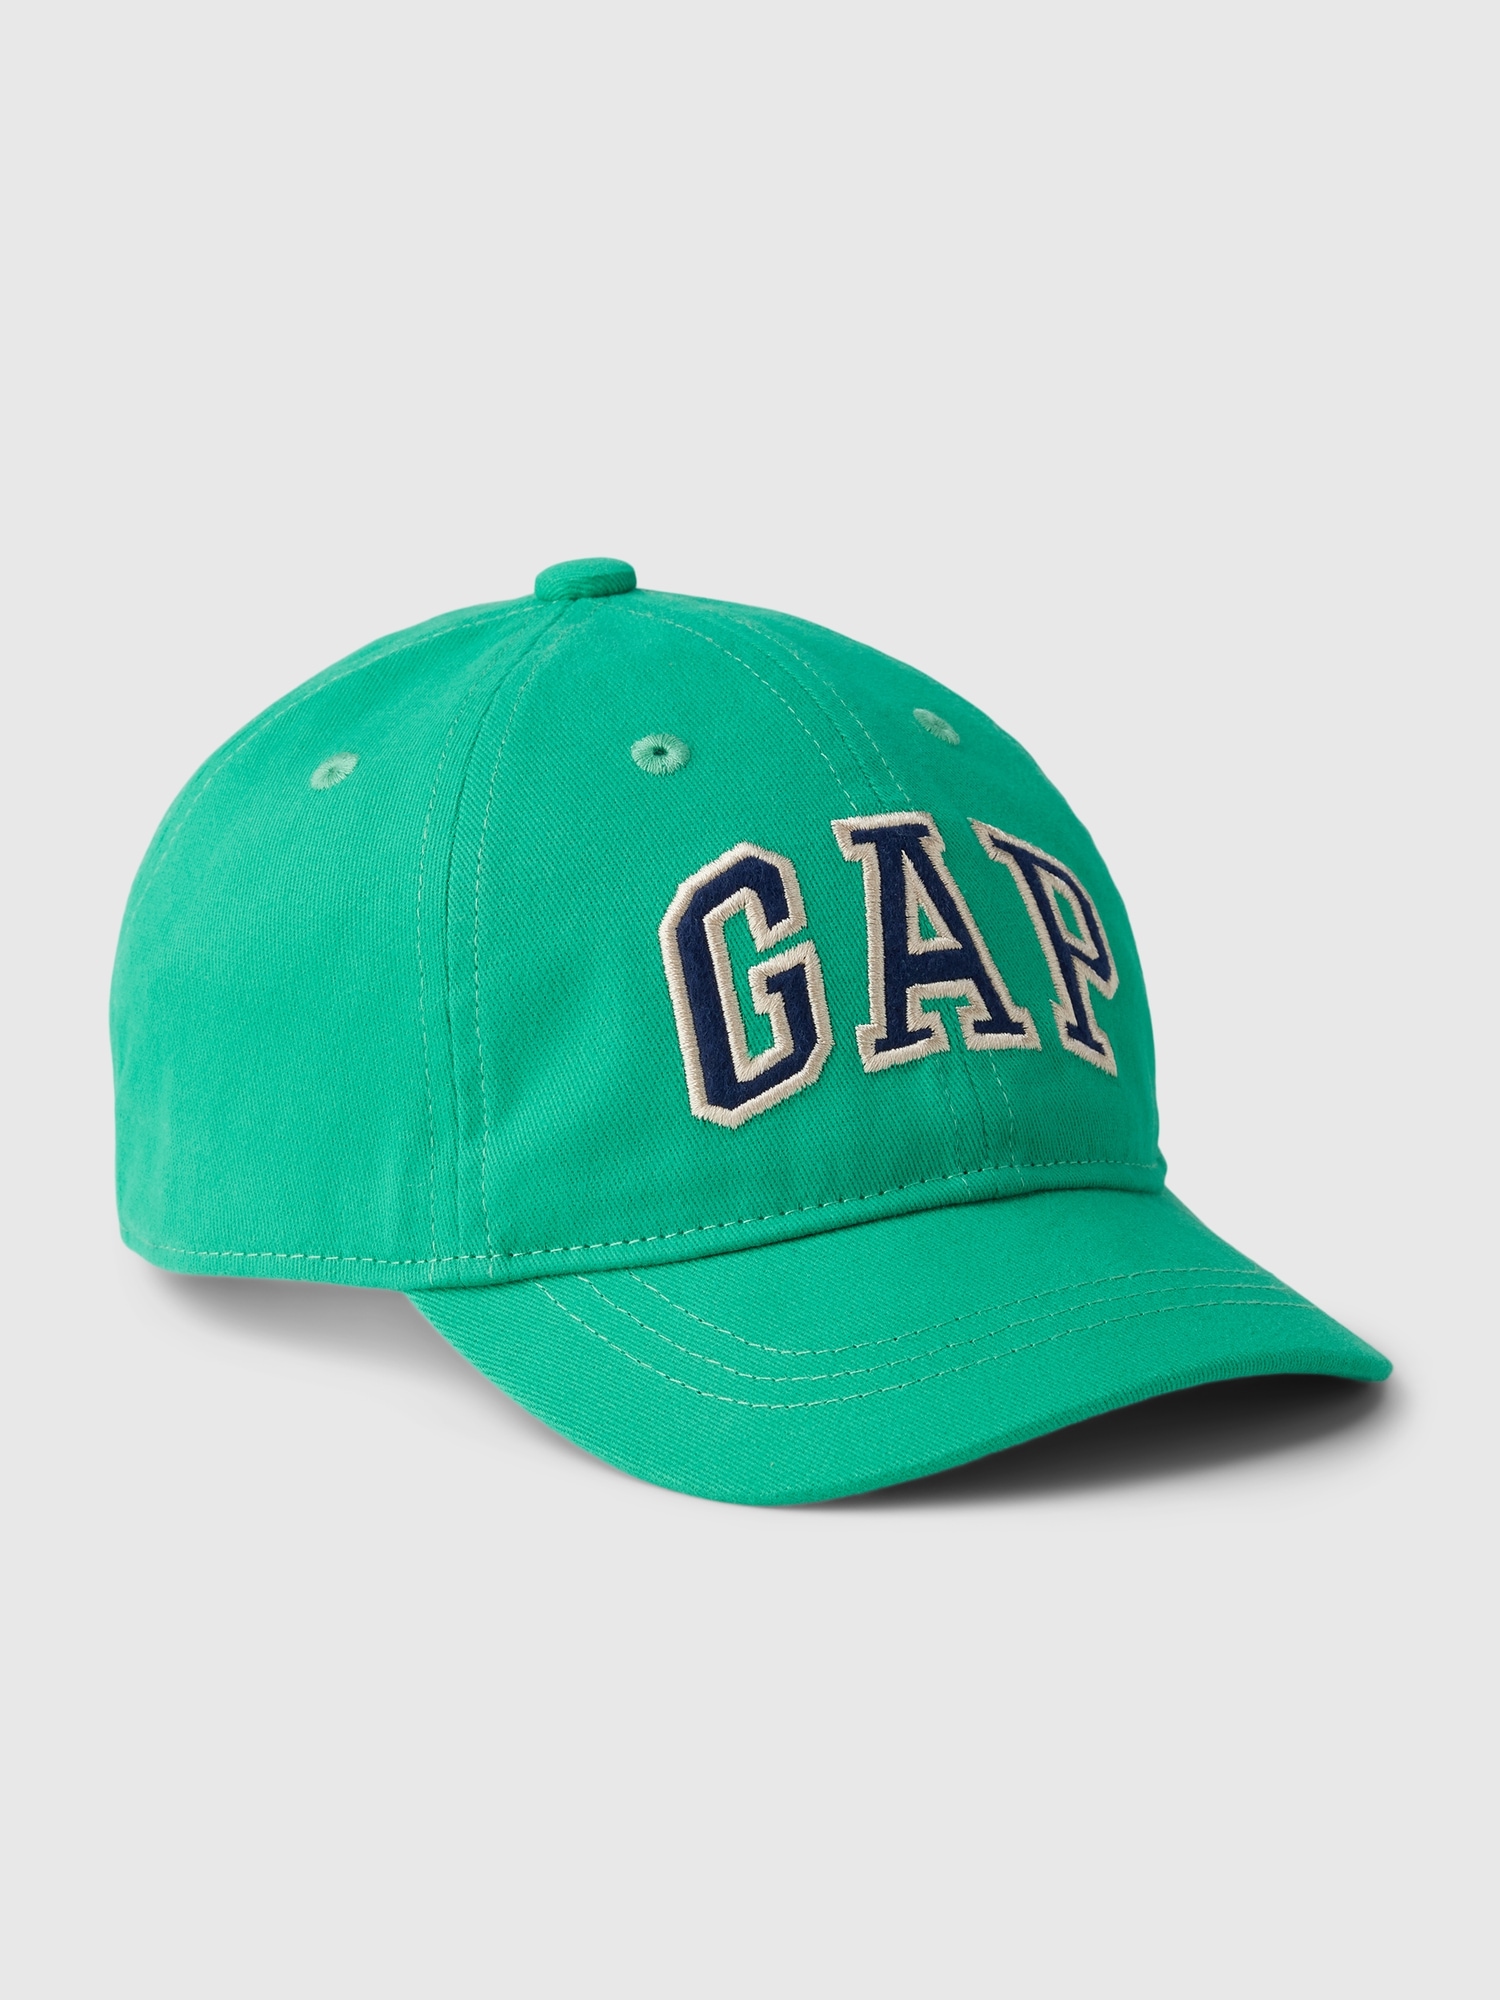 Baseball Caps with | Logo Gap